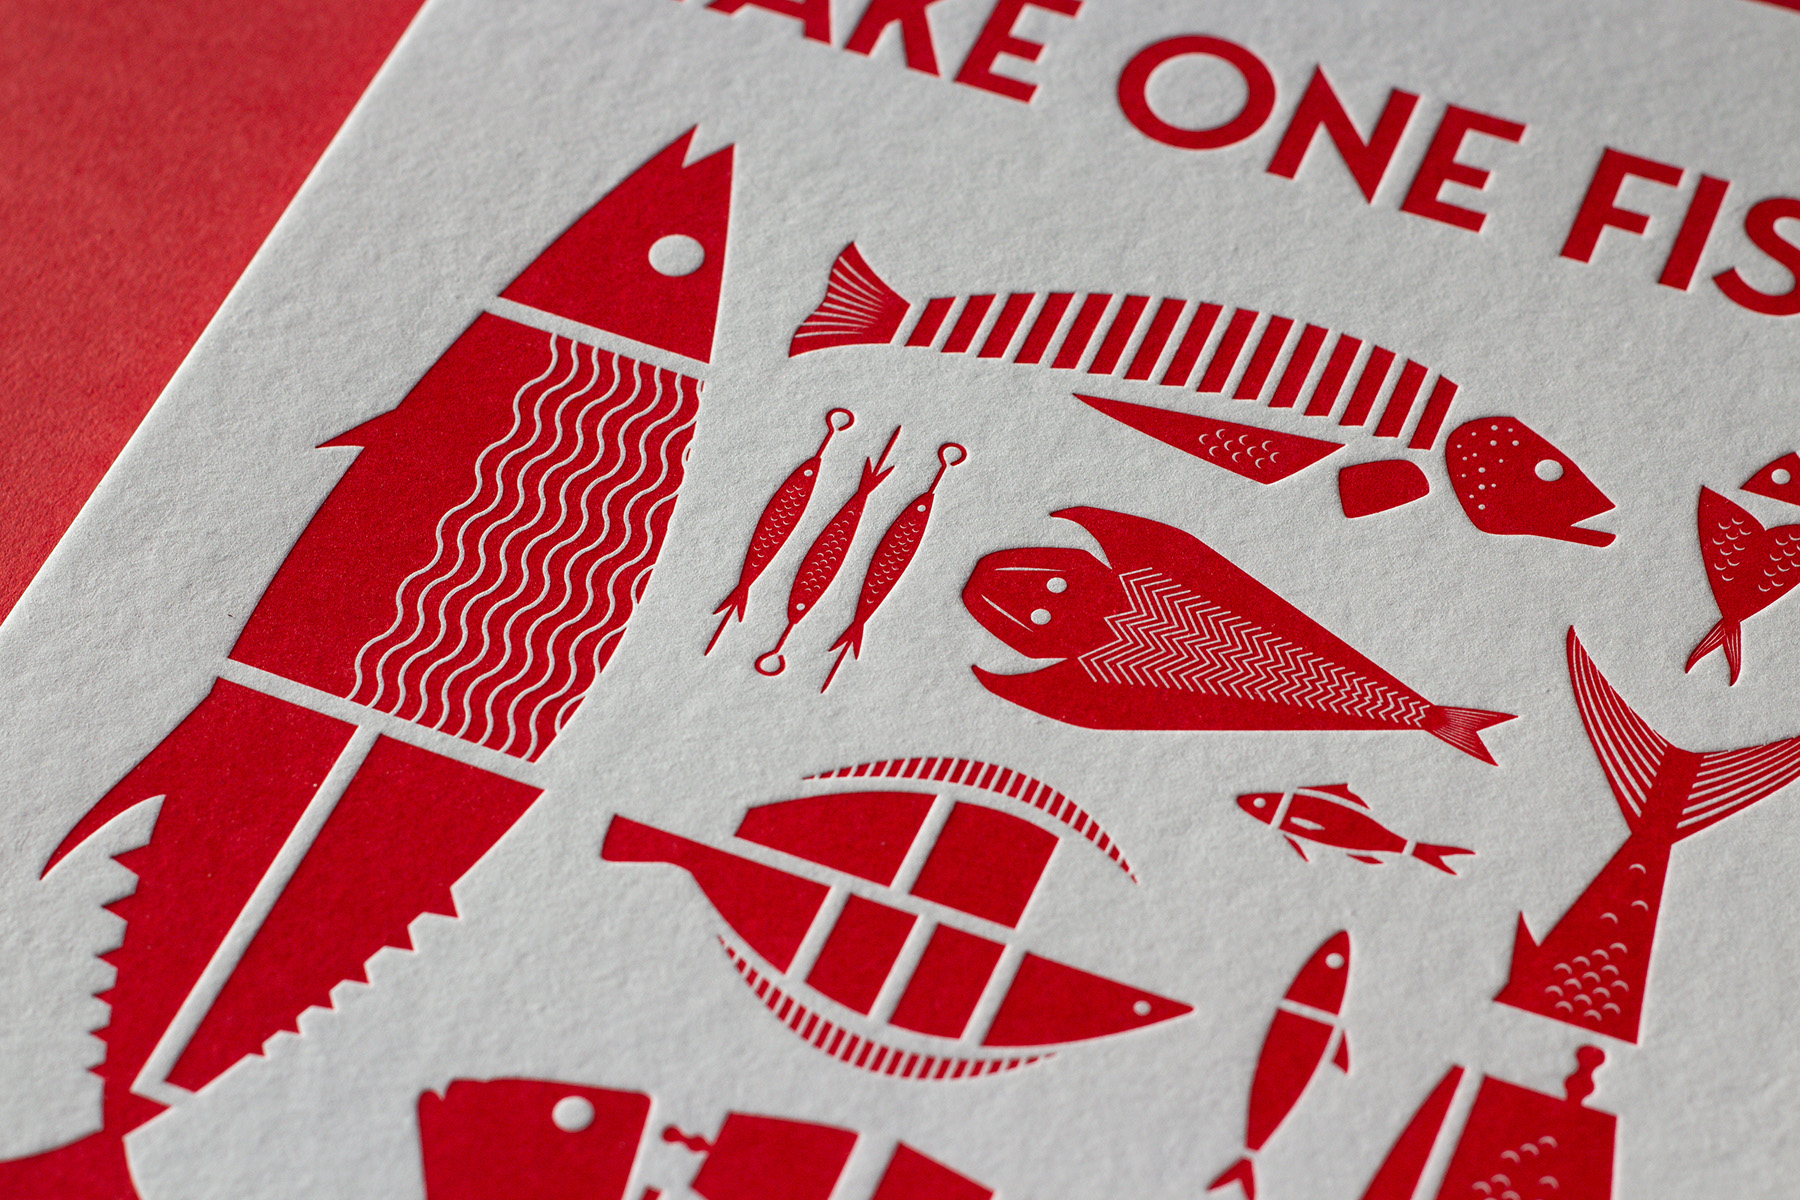 Take One Fish x Hungry Workshop Letterpress Print